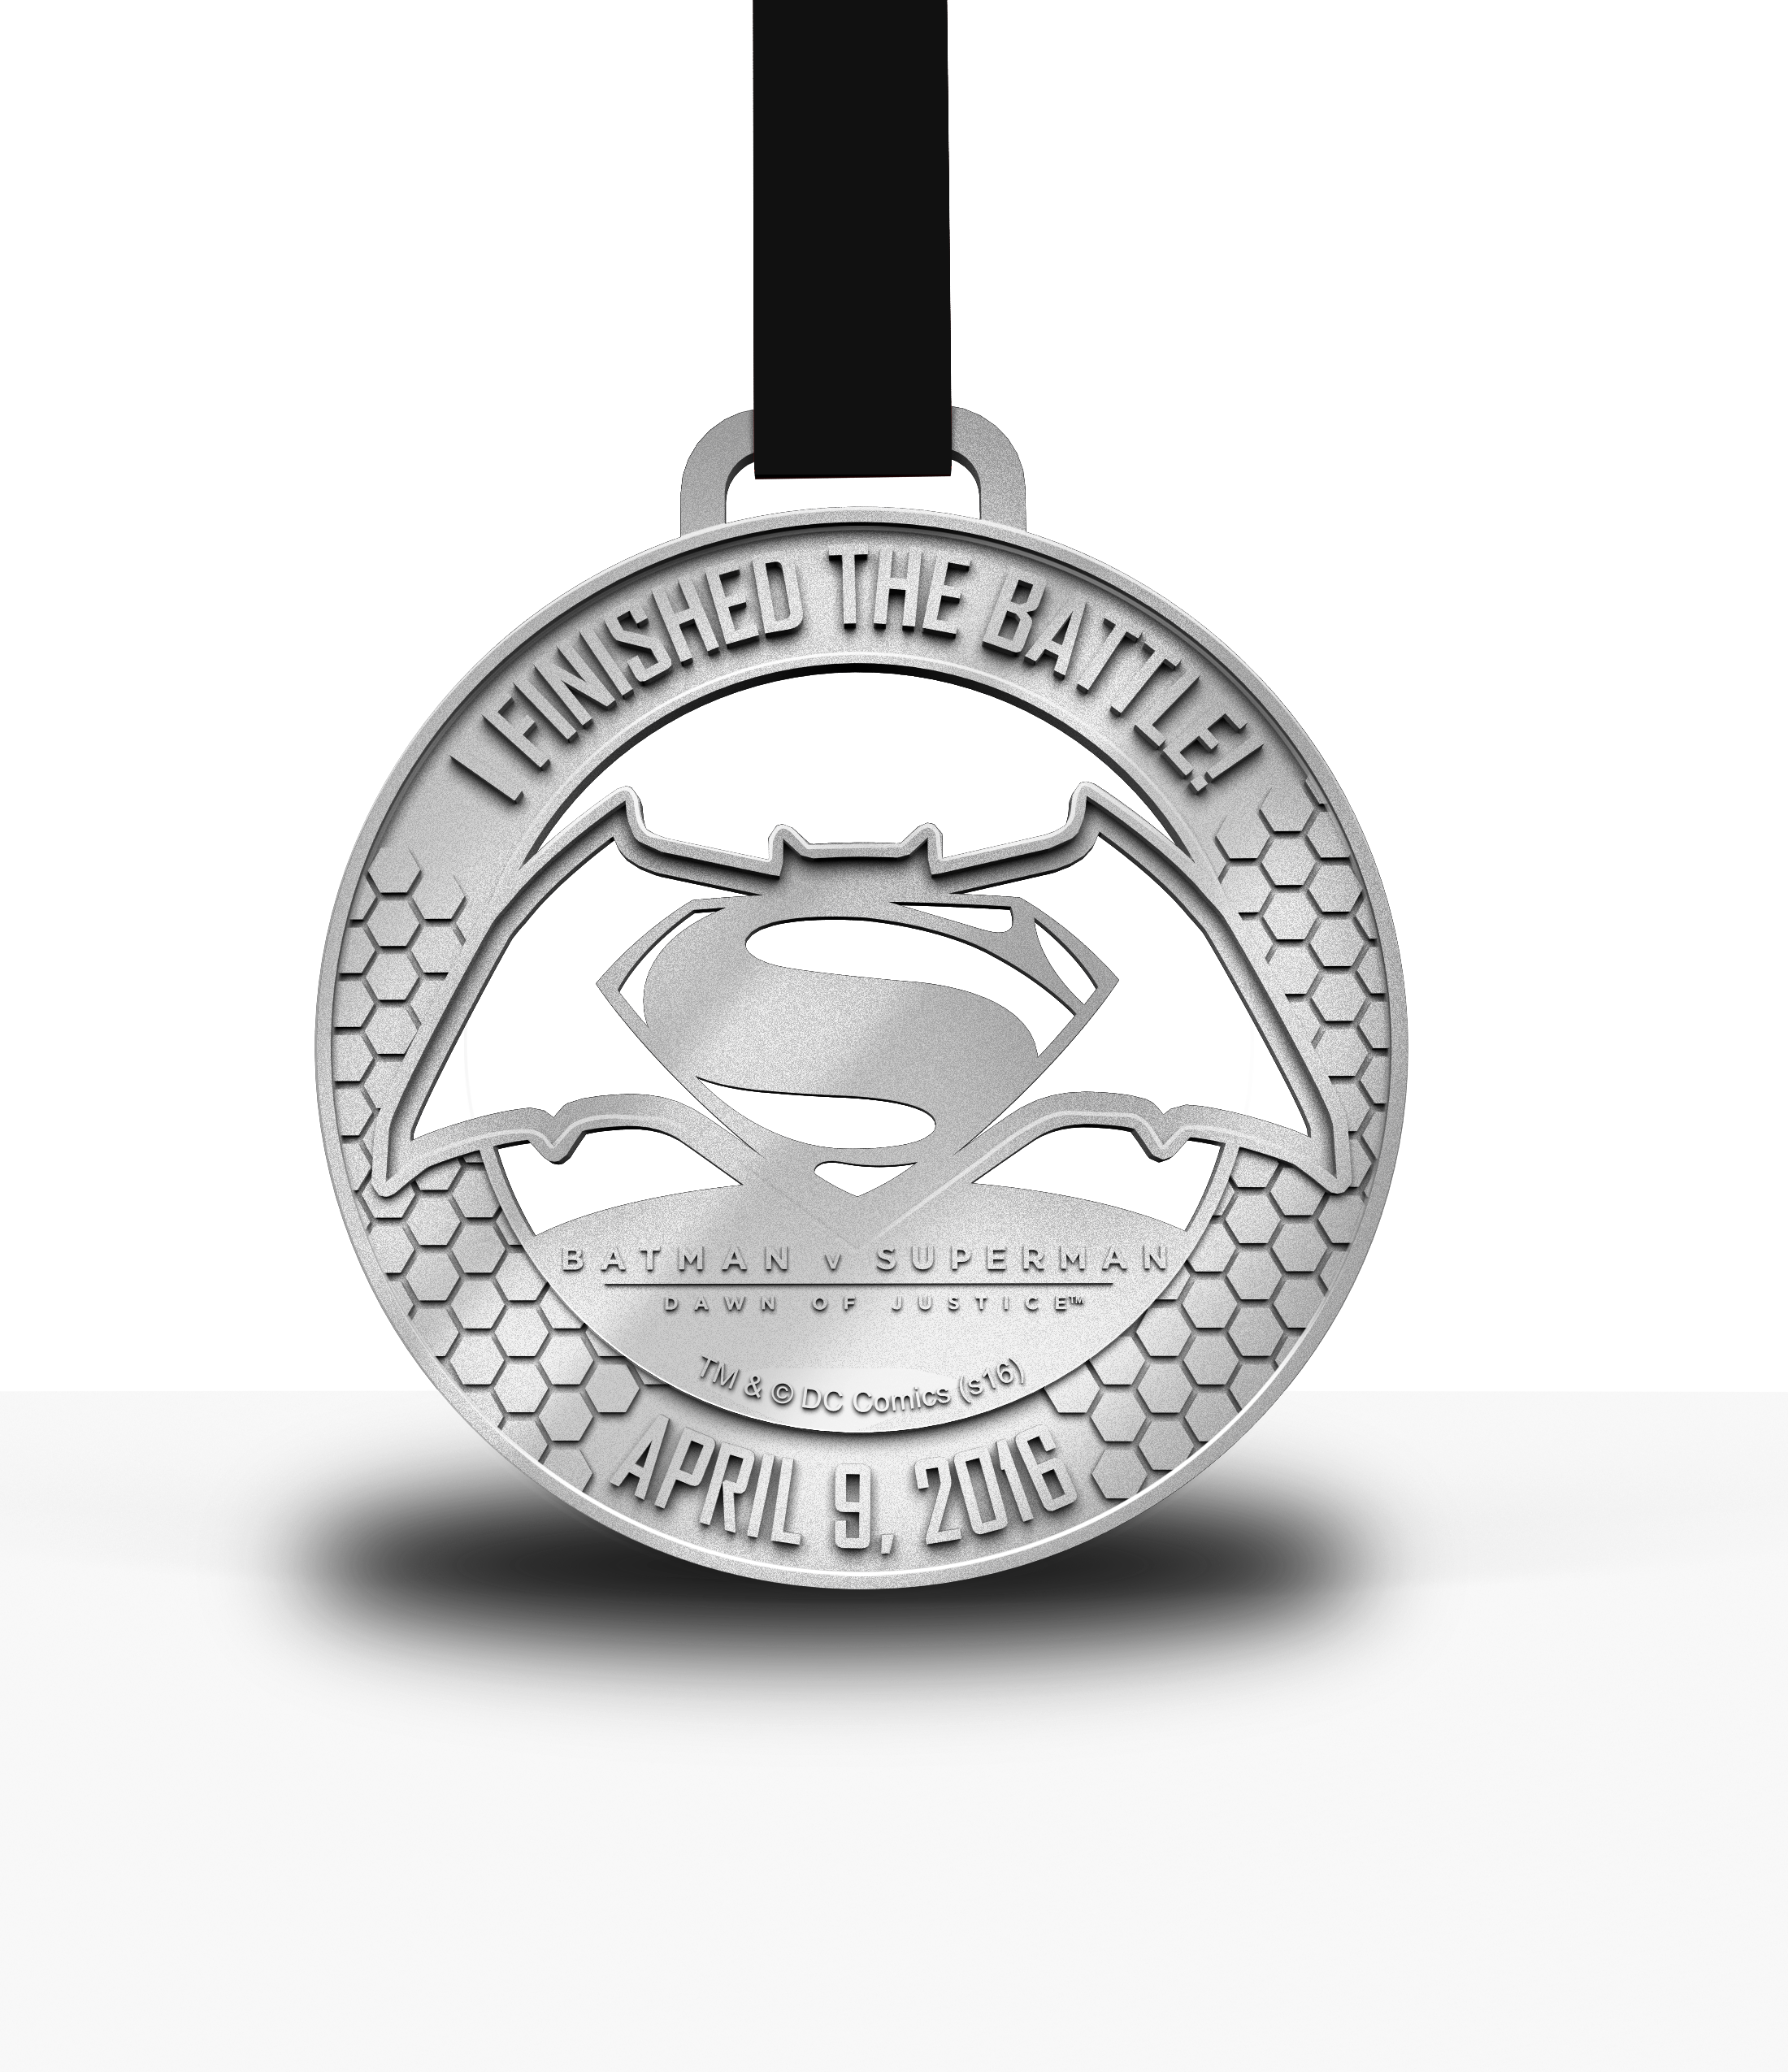 Batman v Superman Run This April finisher's medal